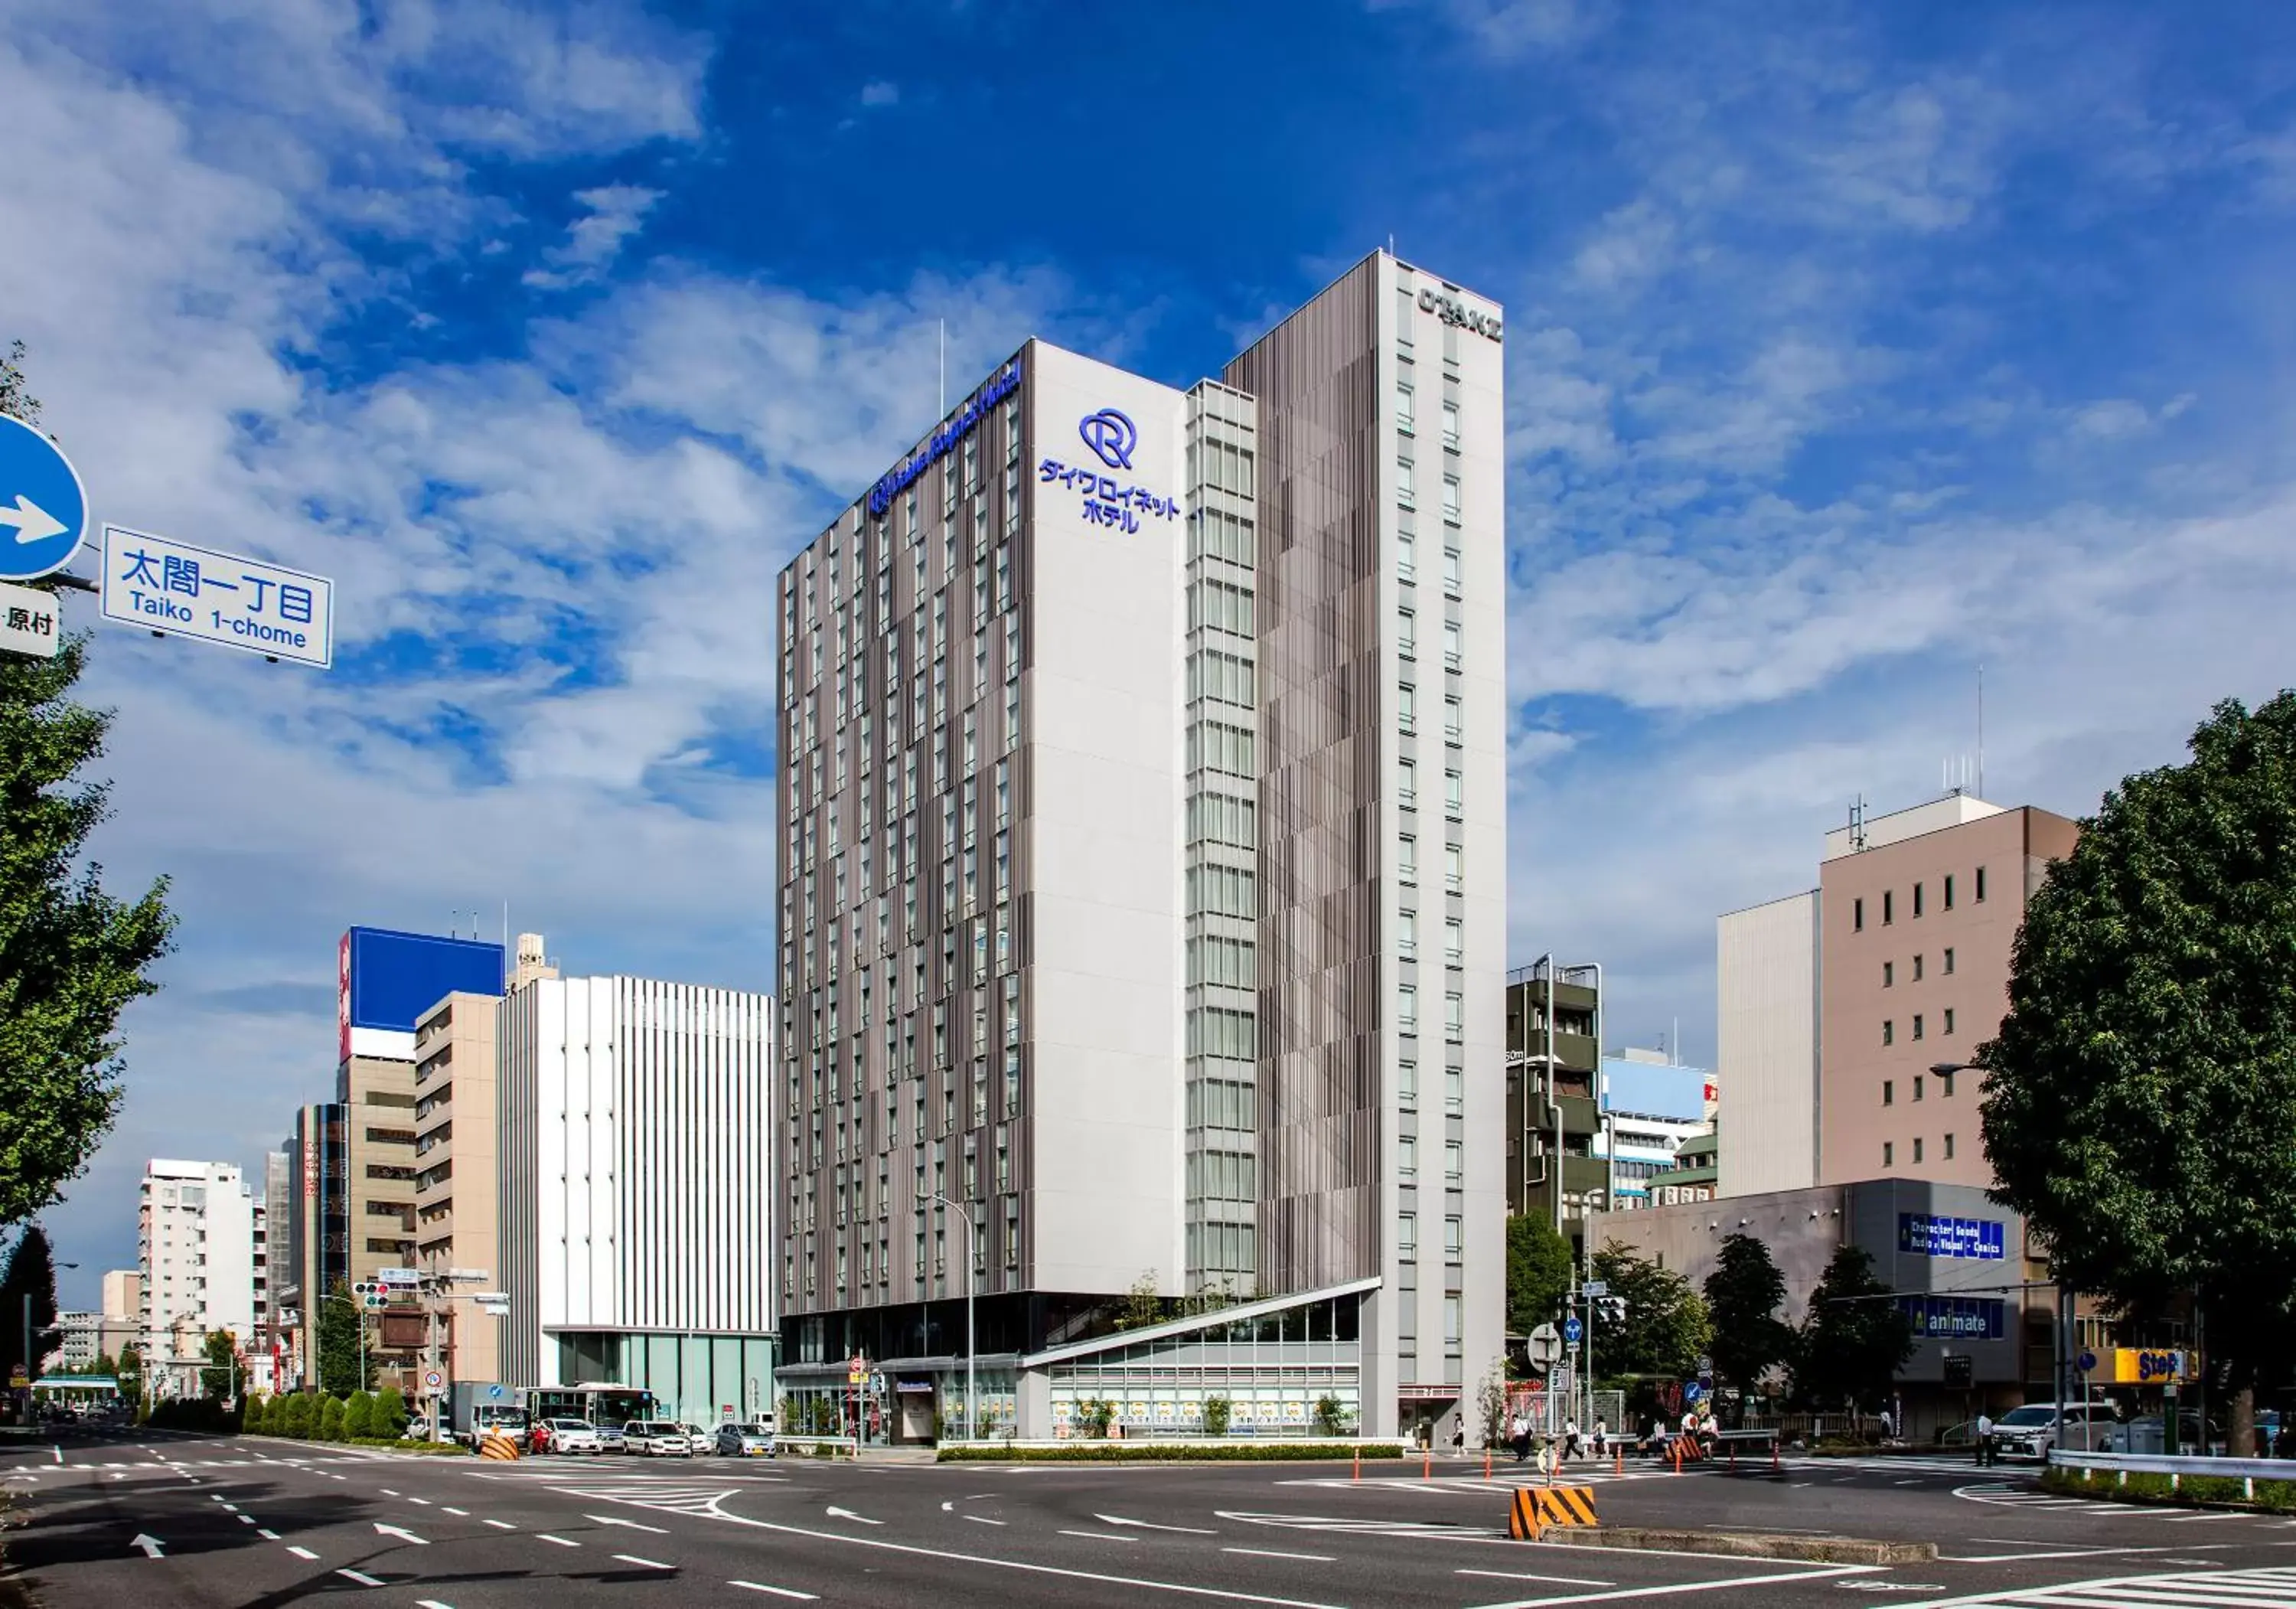 Off site, Property Building in Daiwa Roynet Hotel Nagoya Taiko dori Side